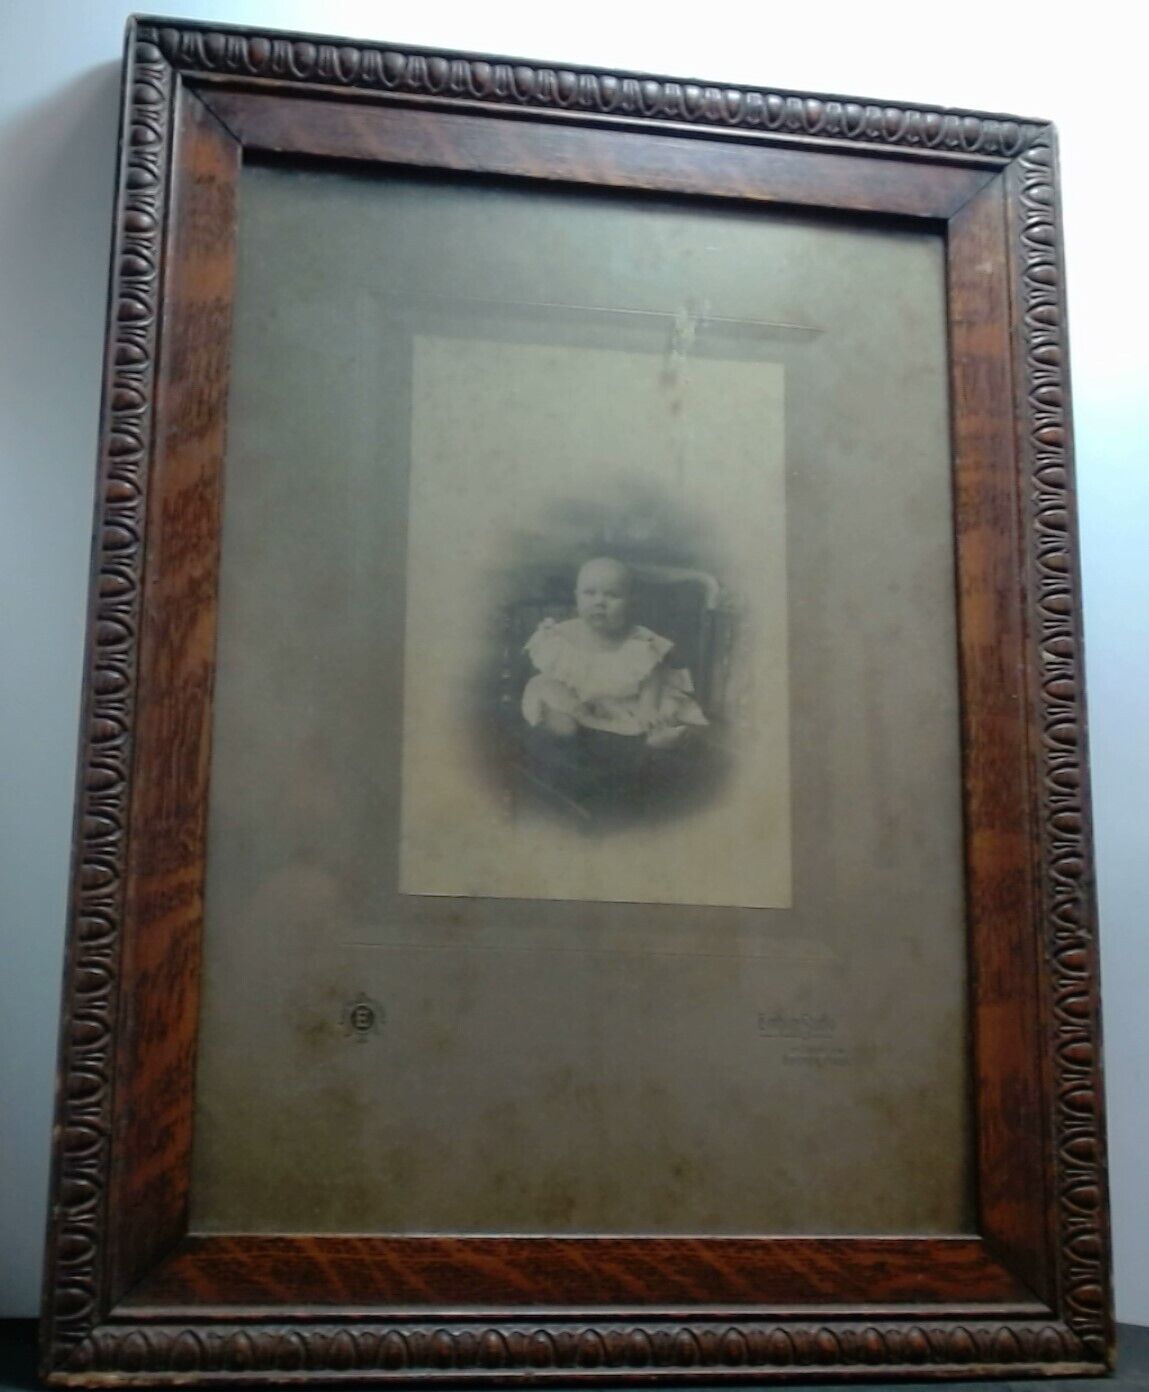 Antique Large-Eyed Baby Photo in Decorative Wood Frame